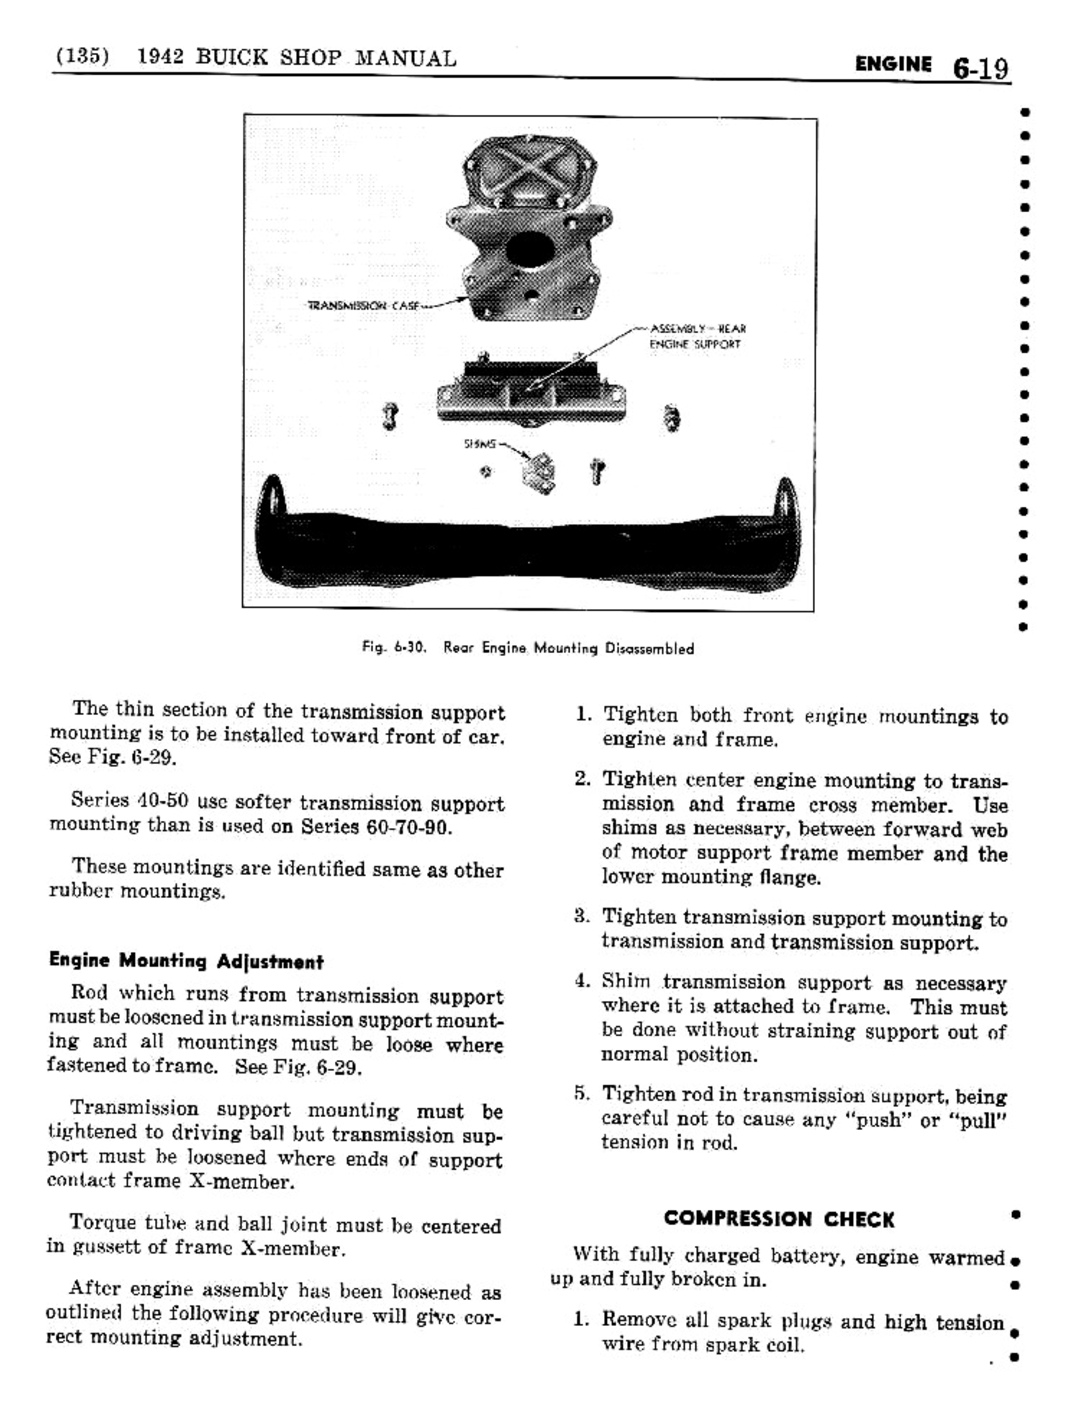 n_07 1942 Buick Shop Manual - Engine-019-019.jpg